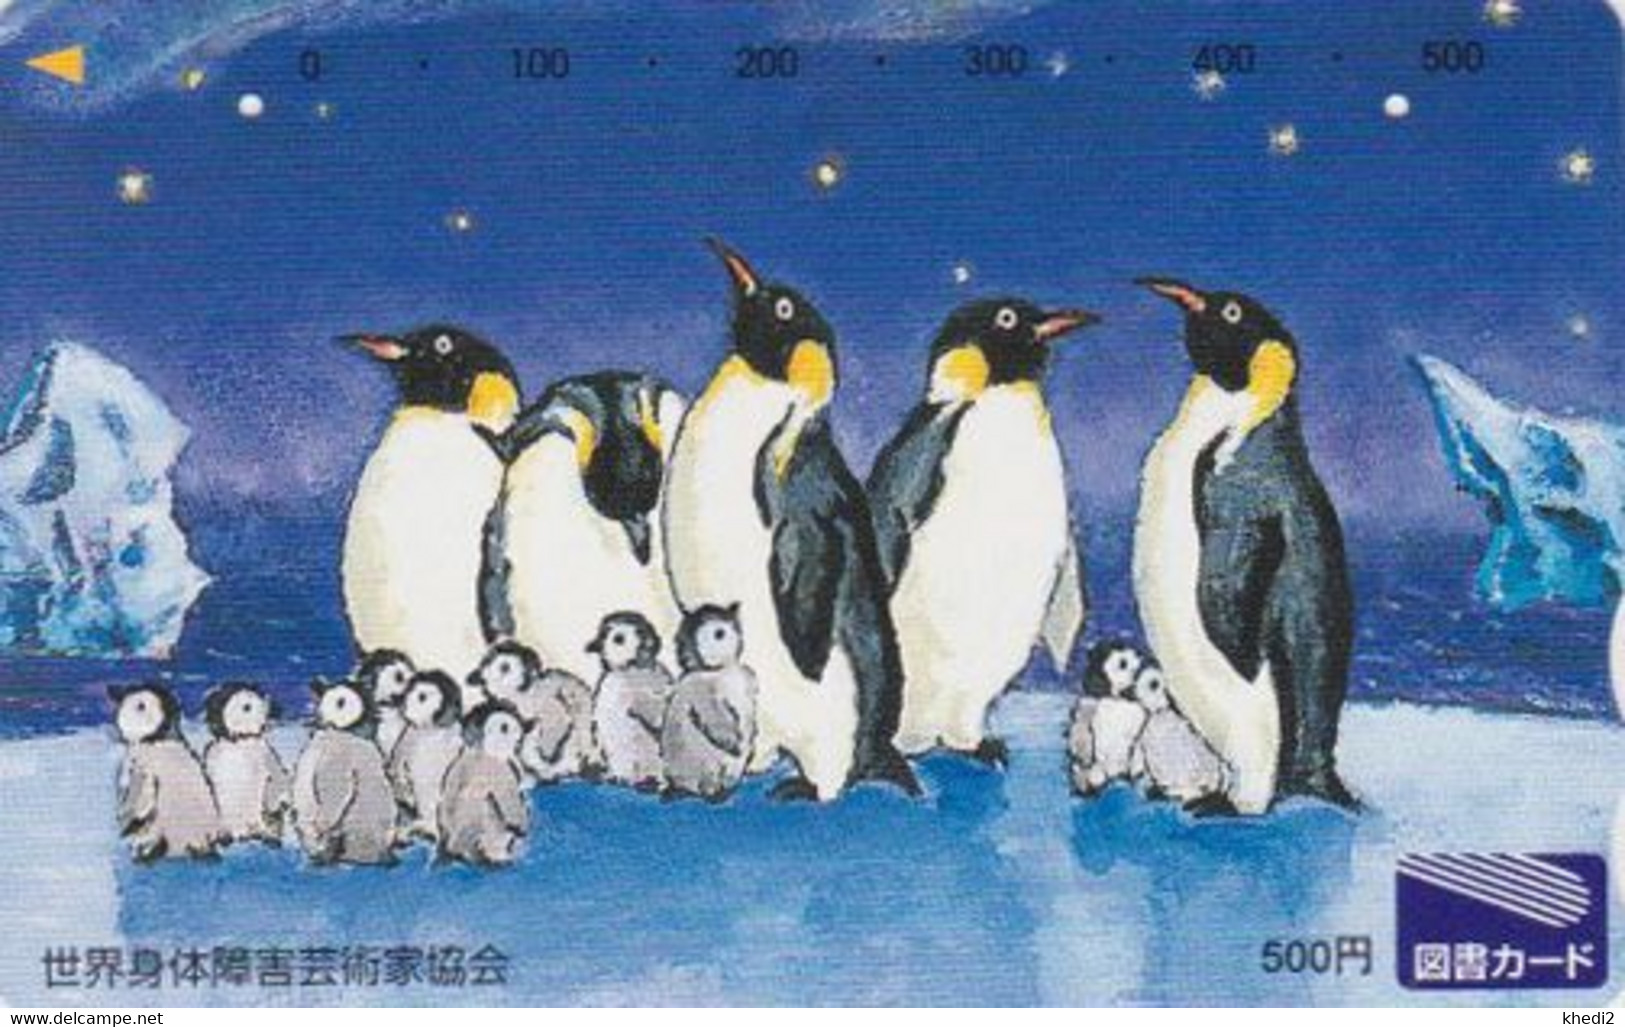 Carte JAPON - ANIMAL - MANCHOT EMPEREUR / Dessin - PENGUIN BIRD JAPAN Prepaid Tosho Card - PINGUIN - 5681 - Pingueinos